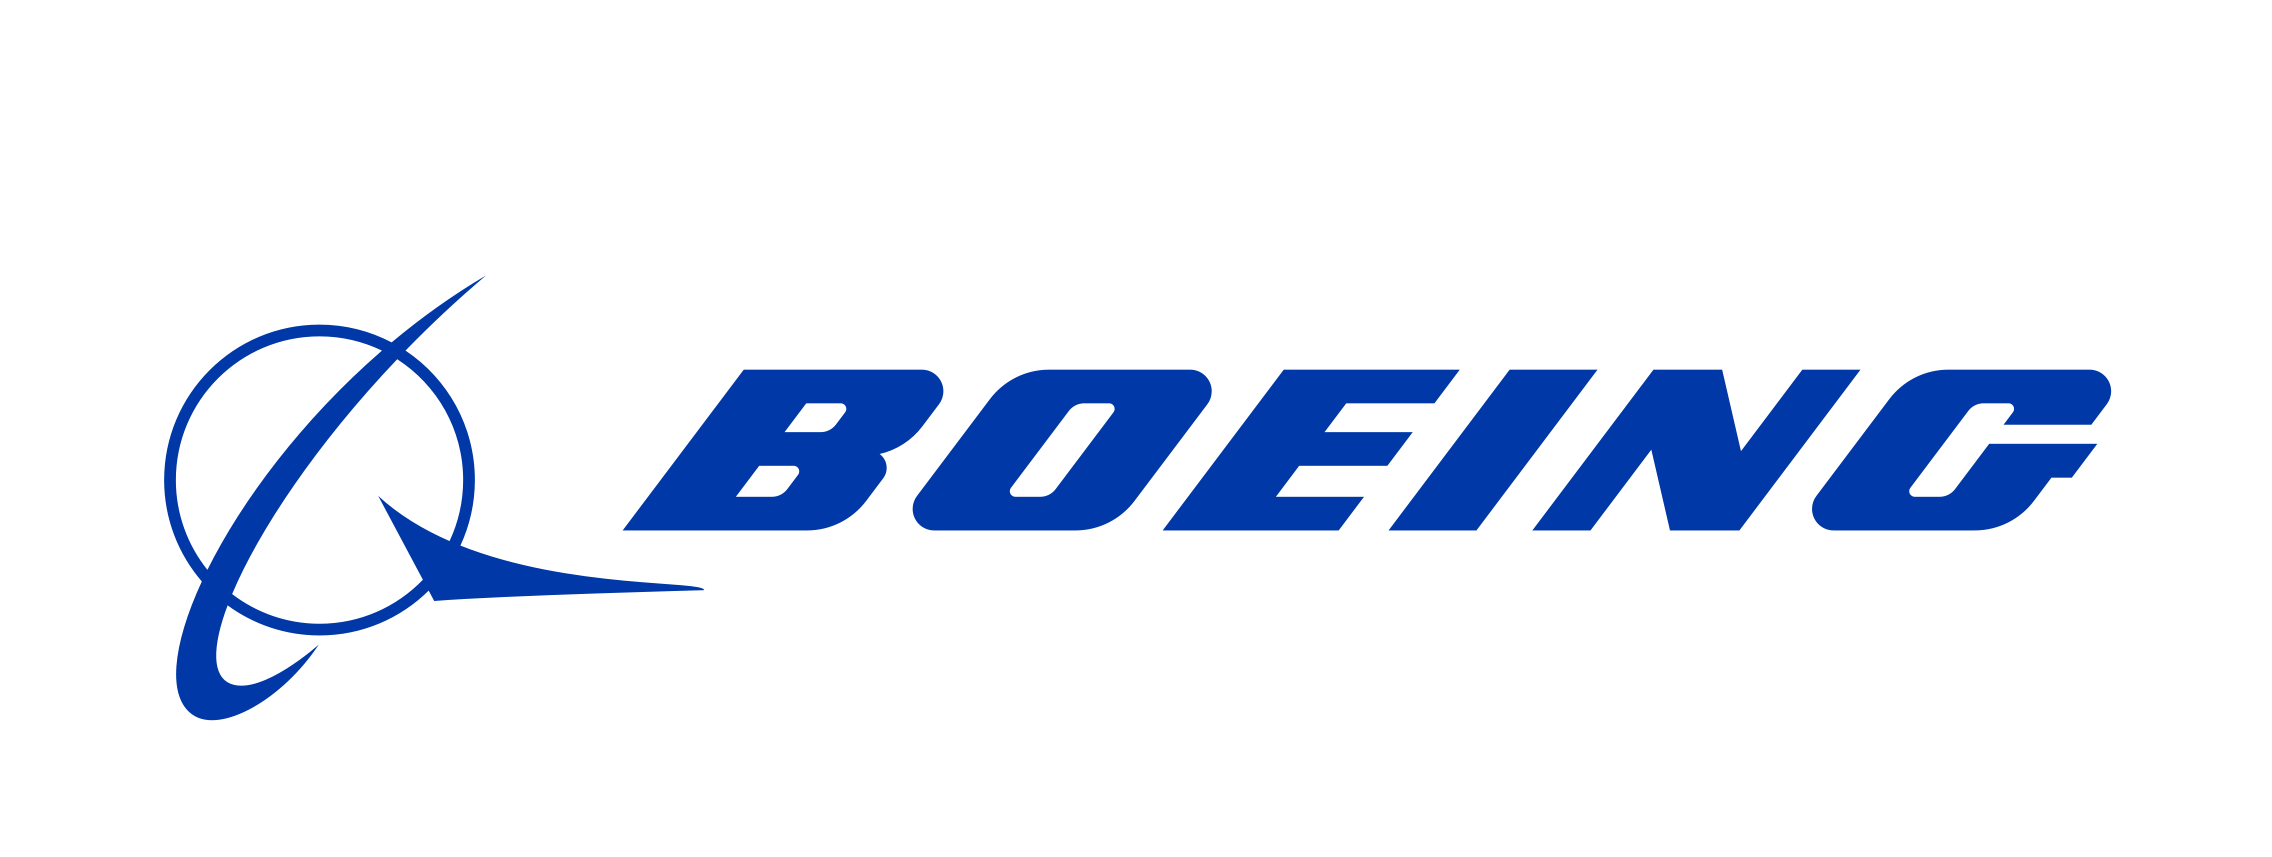 Boeing Company Logo - Boeing: Boeing Australia